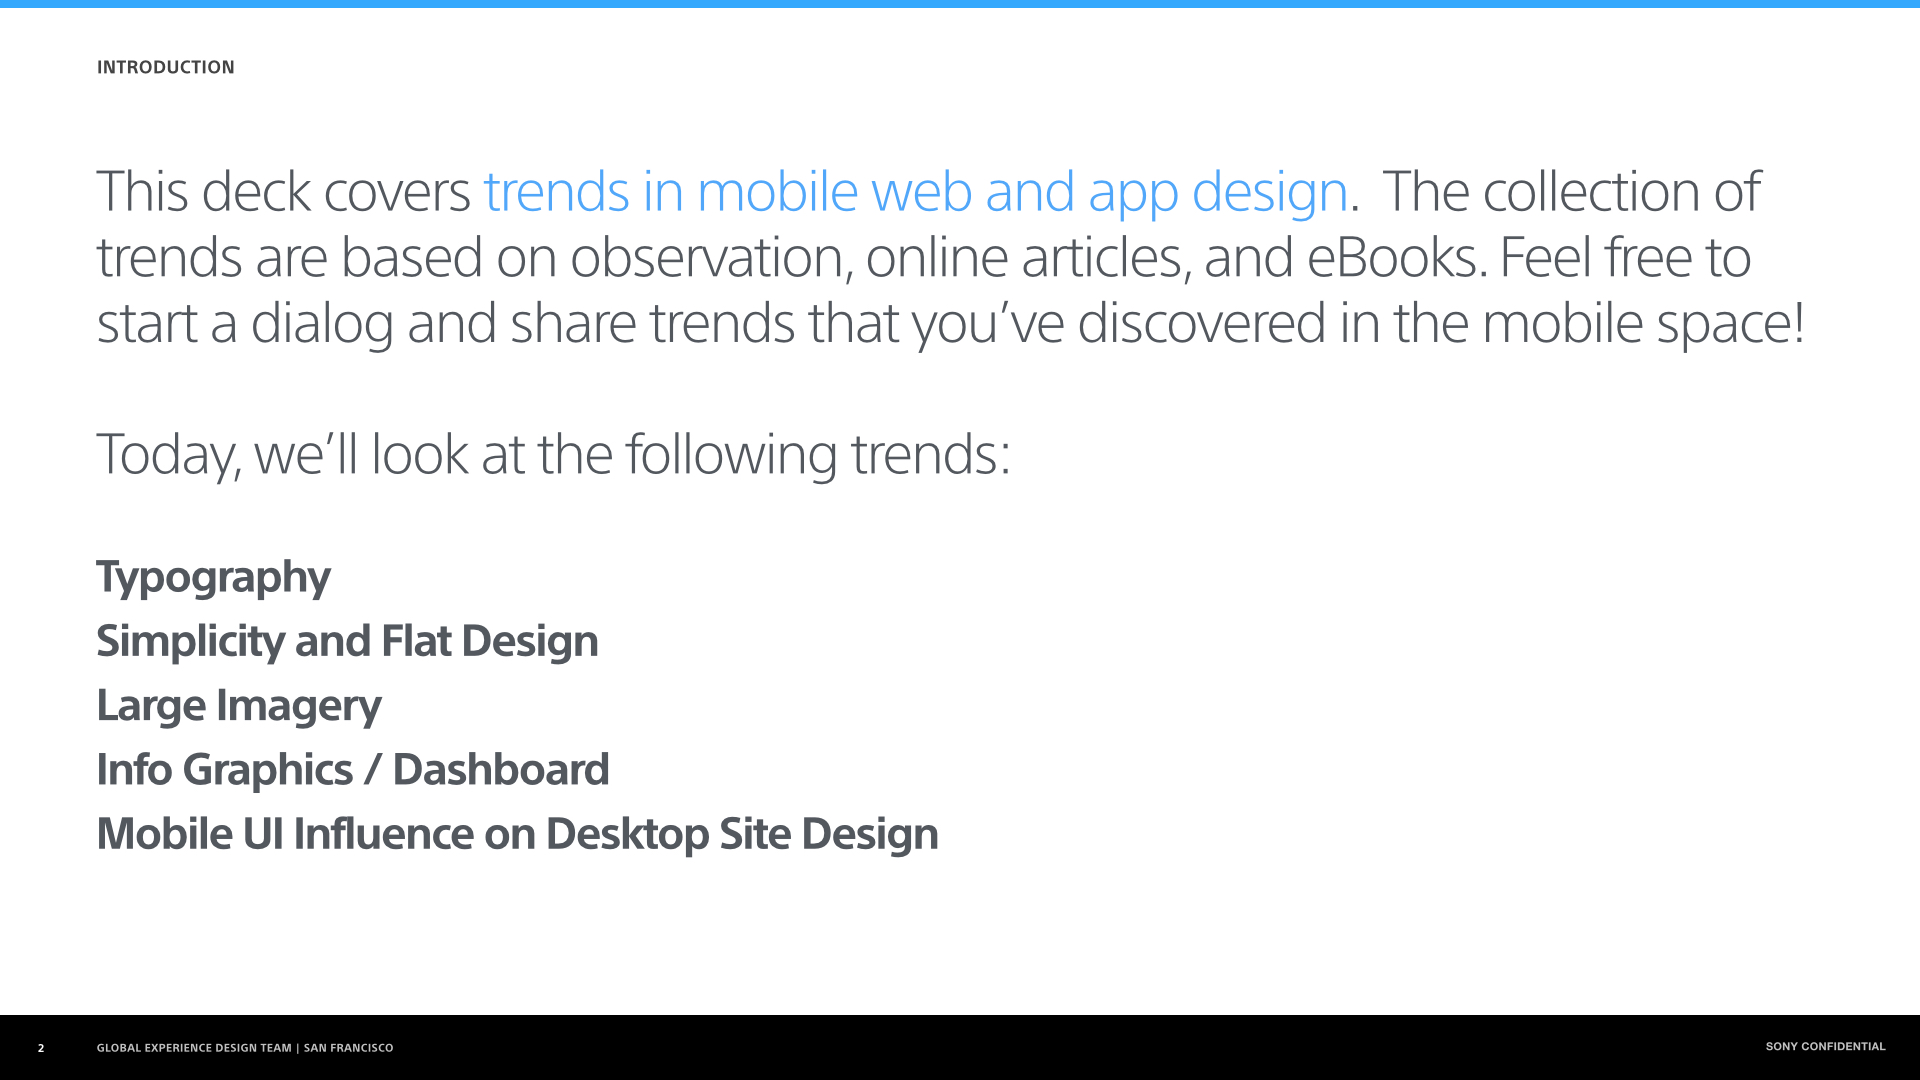 mobile_web_design_trends_v3.002.jpg